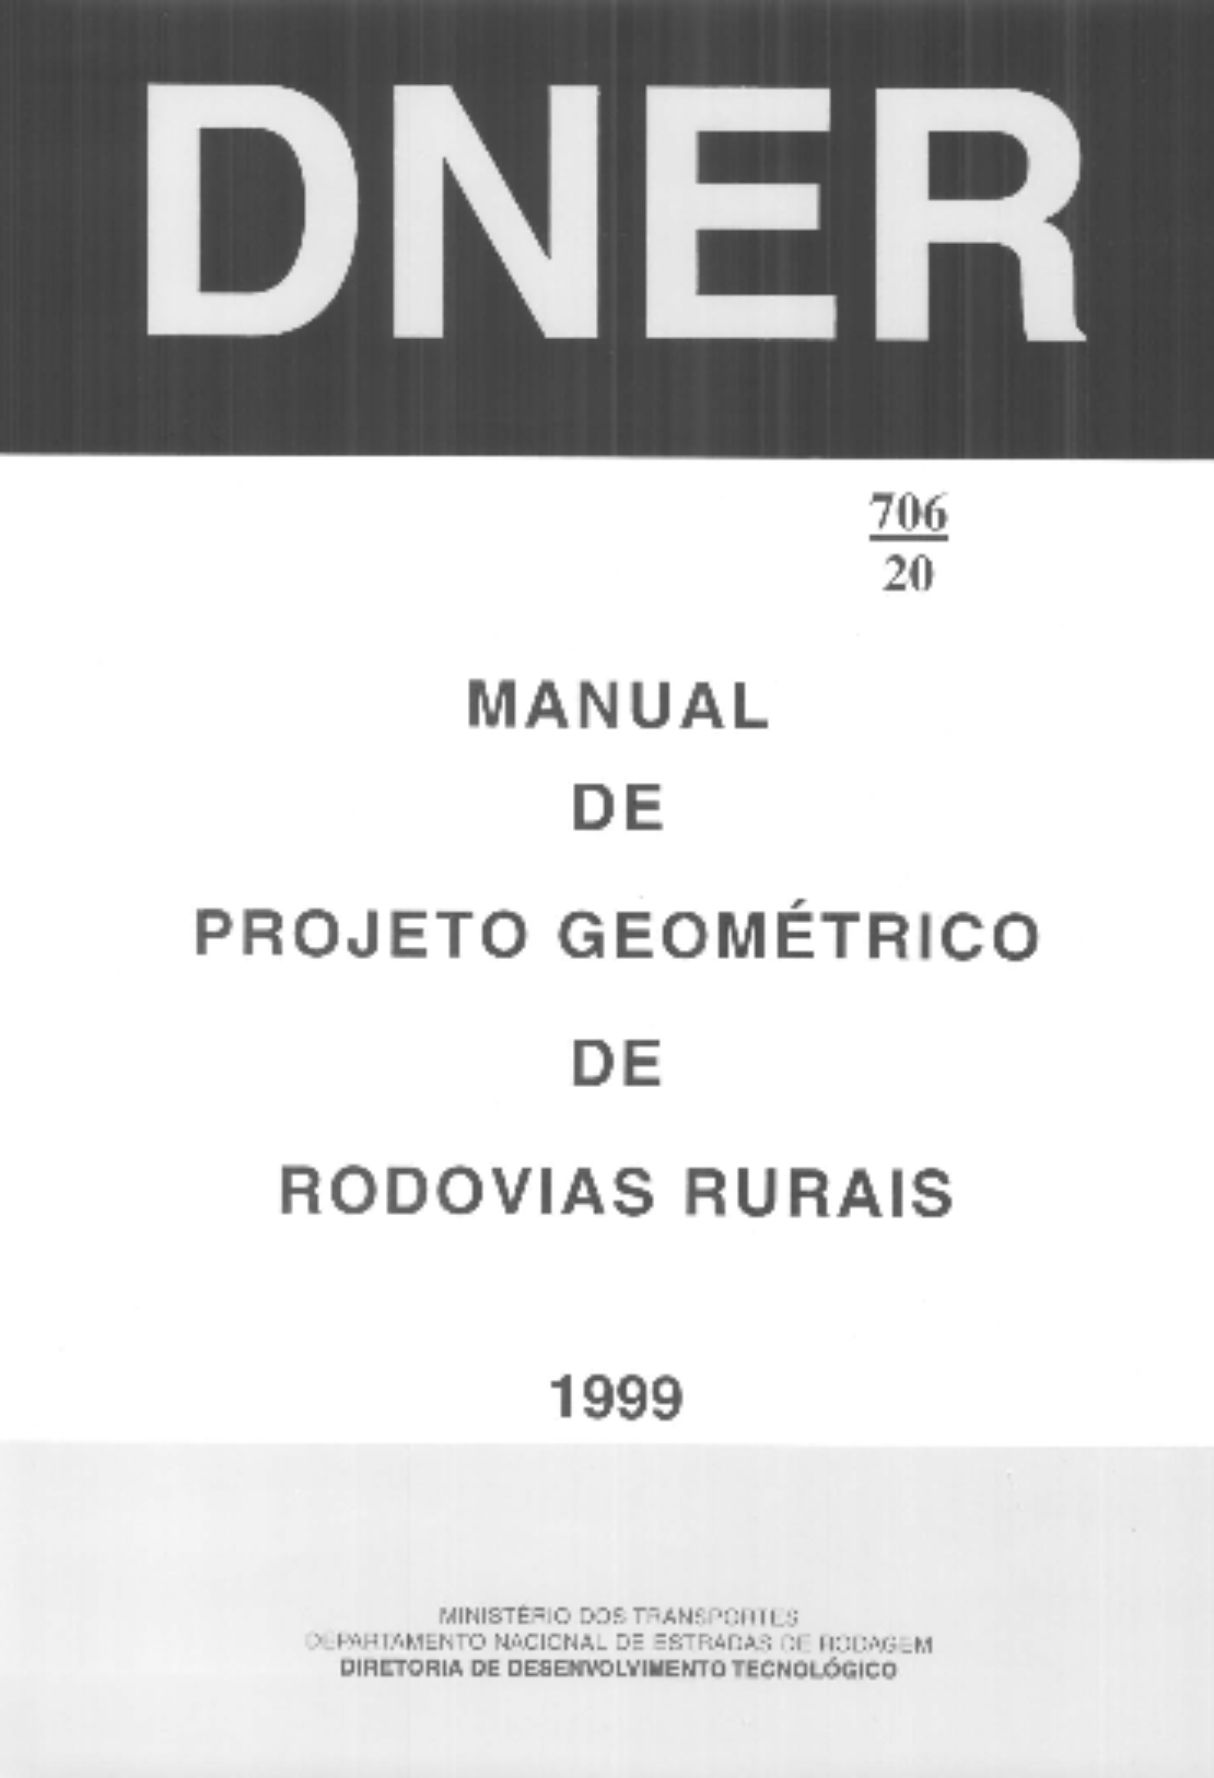 Capa: Manual de projeto geométrico de rodovias rurais